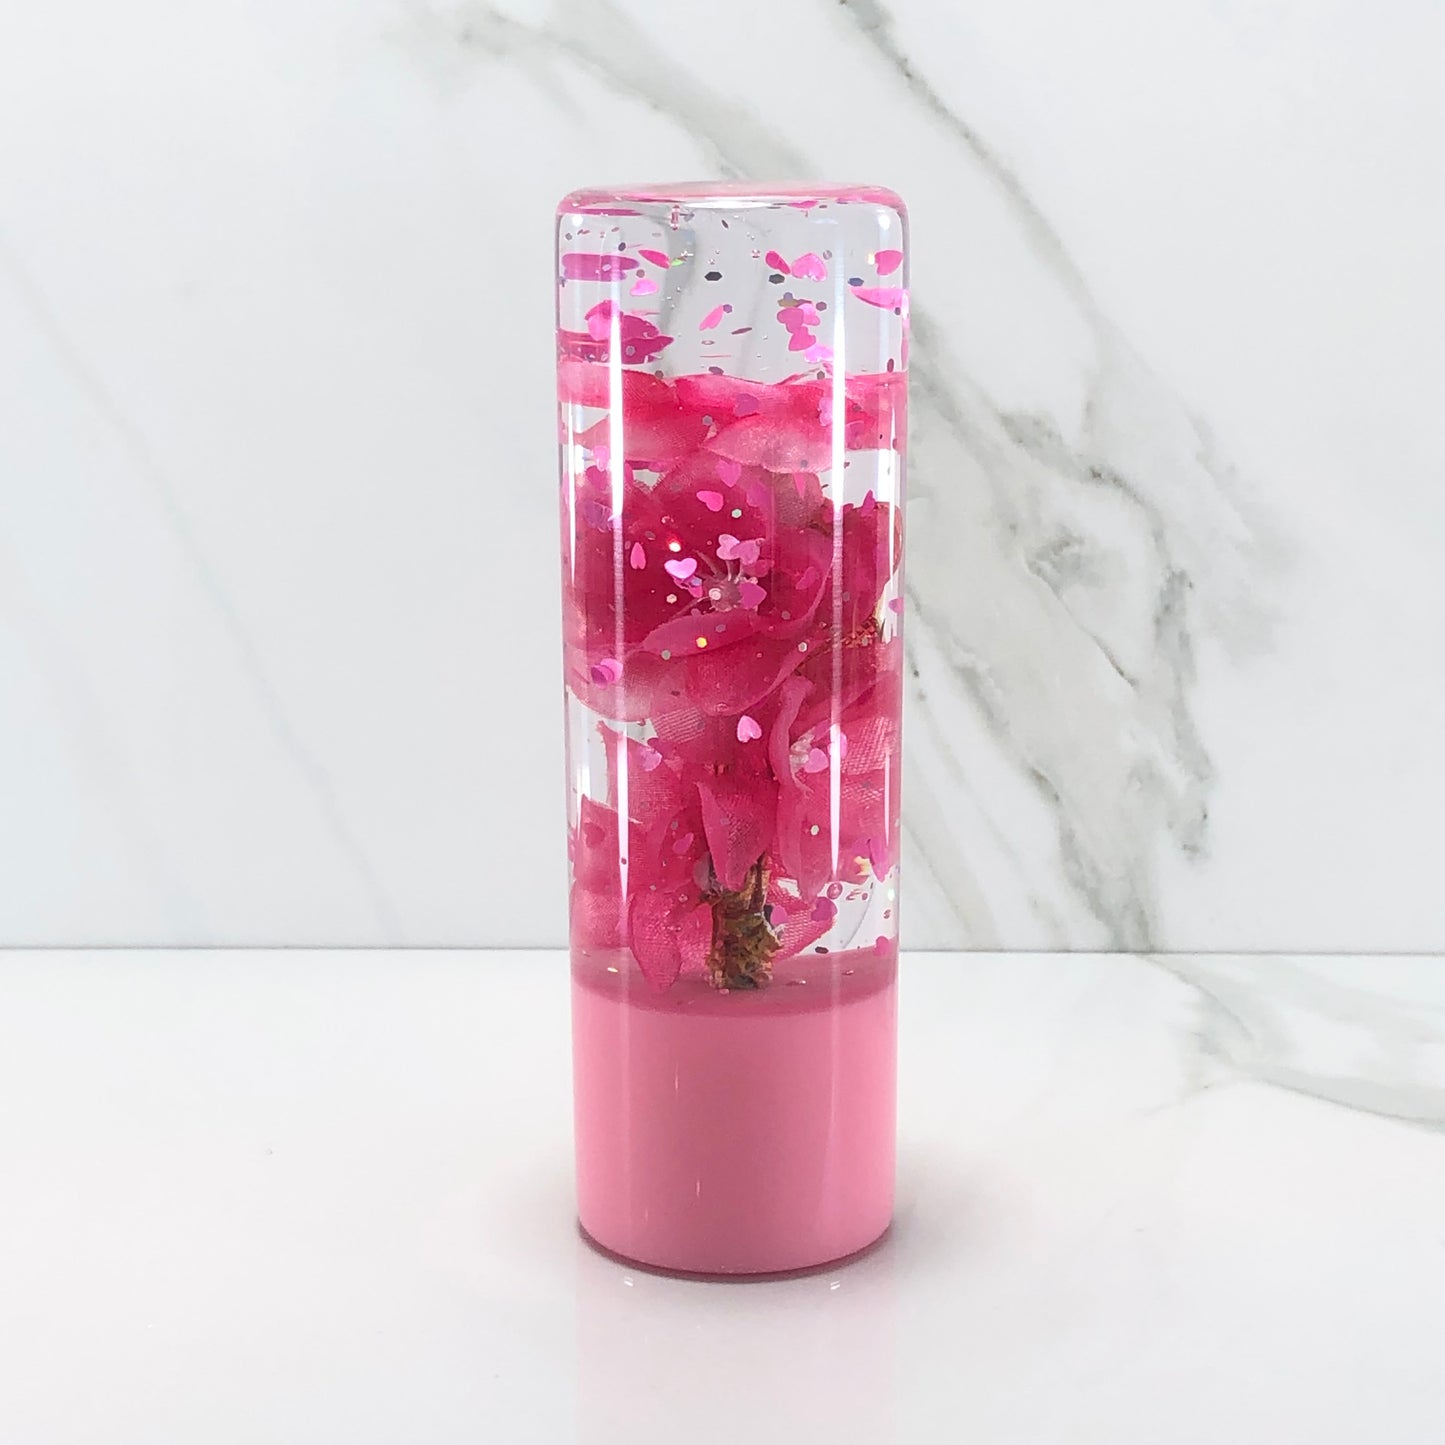 Mr__Grip 4 1/2 inch resin light pink cherry blossom Kirby